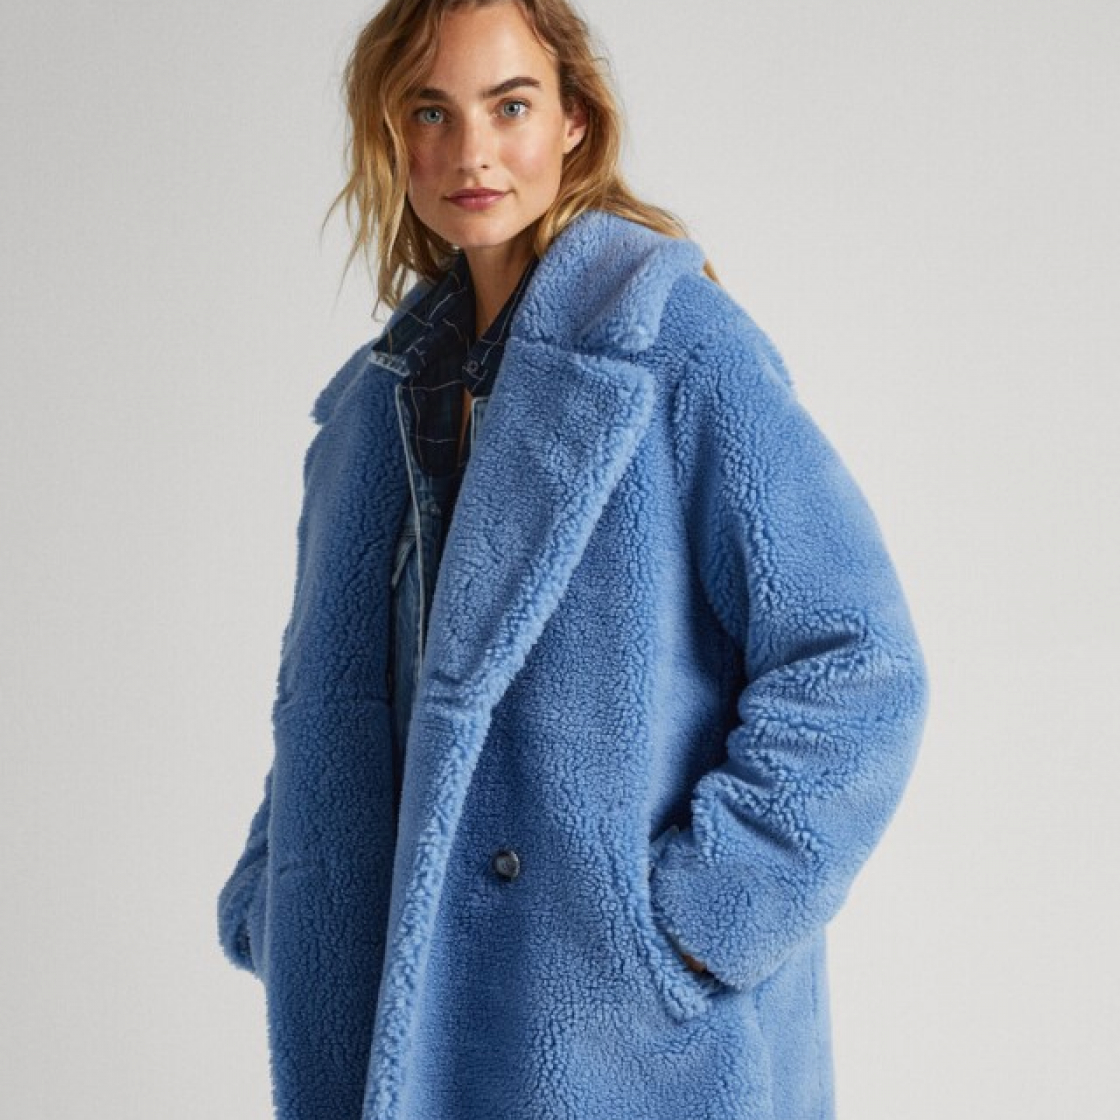 Cozy coat season. 🐻 Linking my favorite teddy bear coats in my bio.   #winterfashion #liketkit